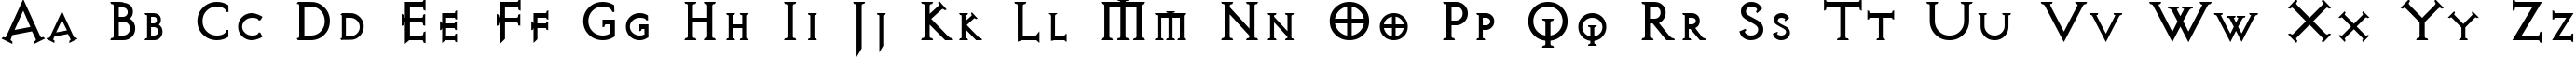 Пример написания английского алфавита шрифтом AvQest